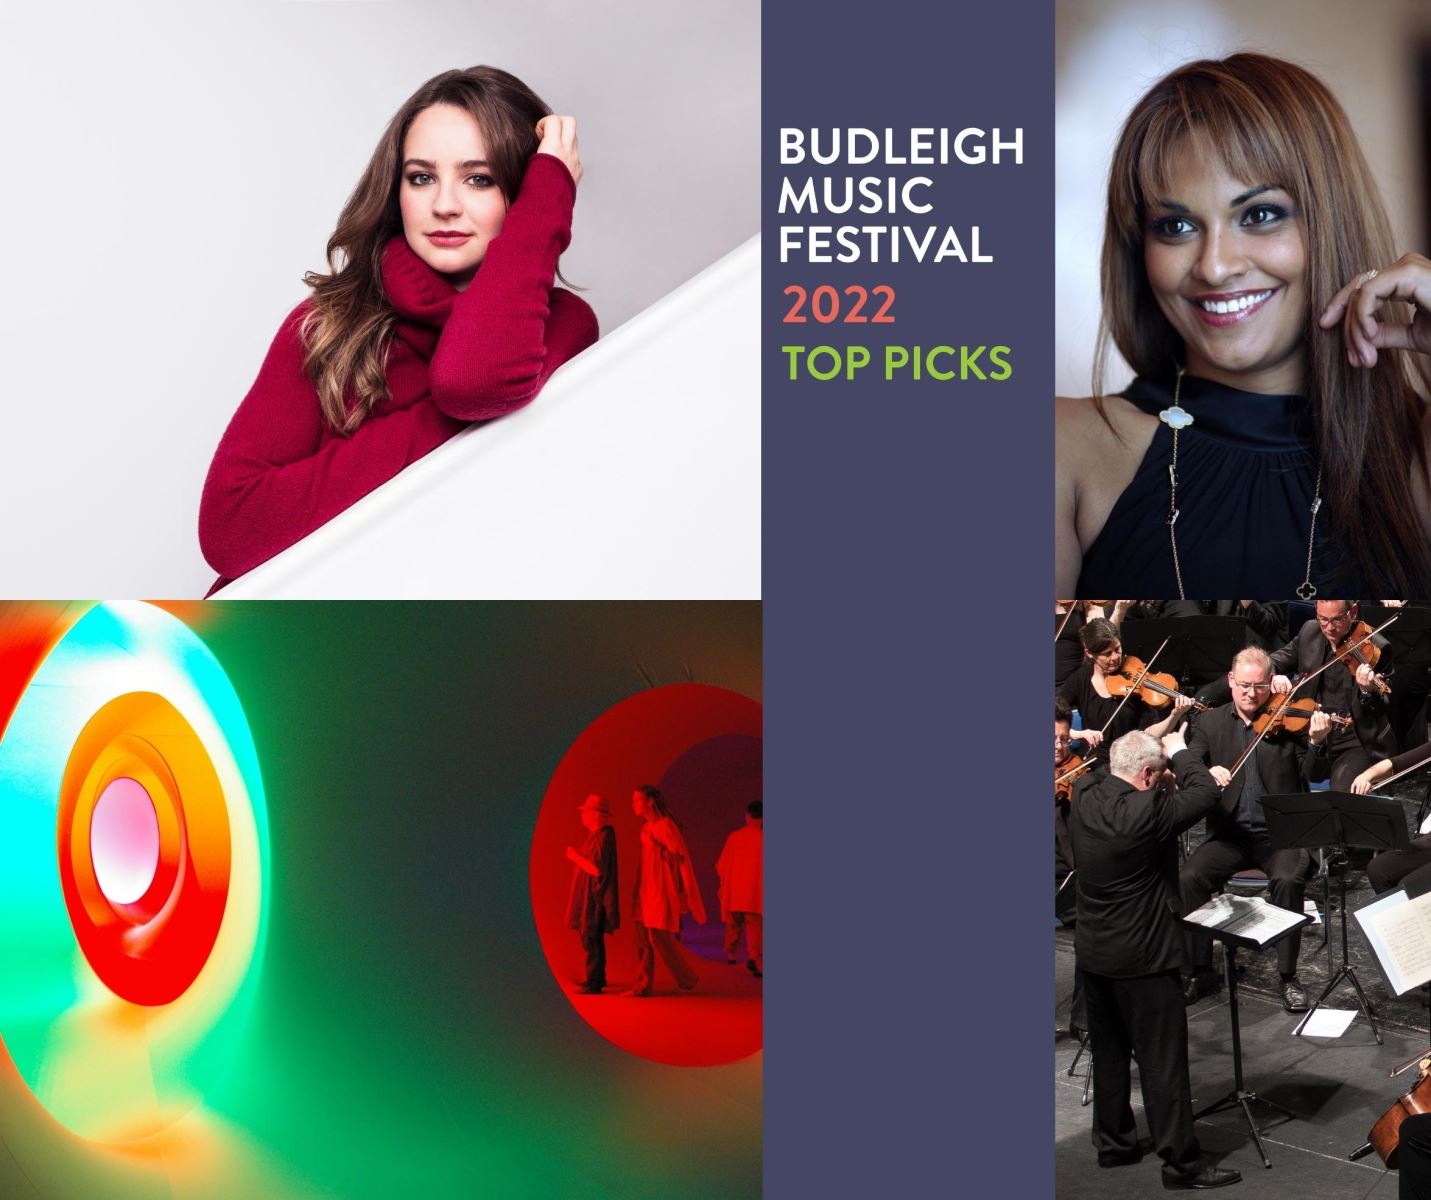 Budleigh Music Festival 2022